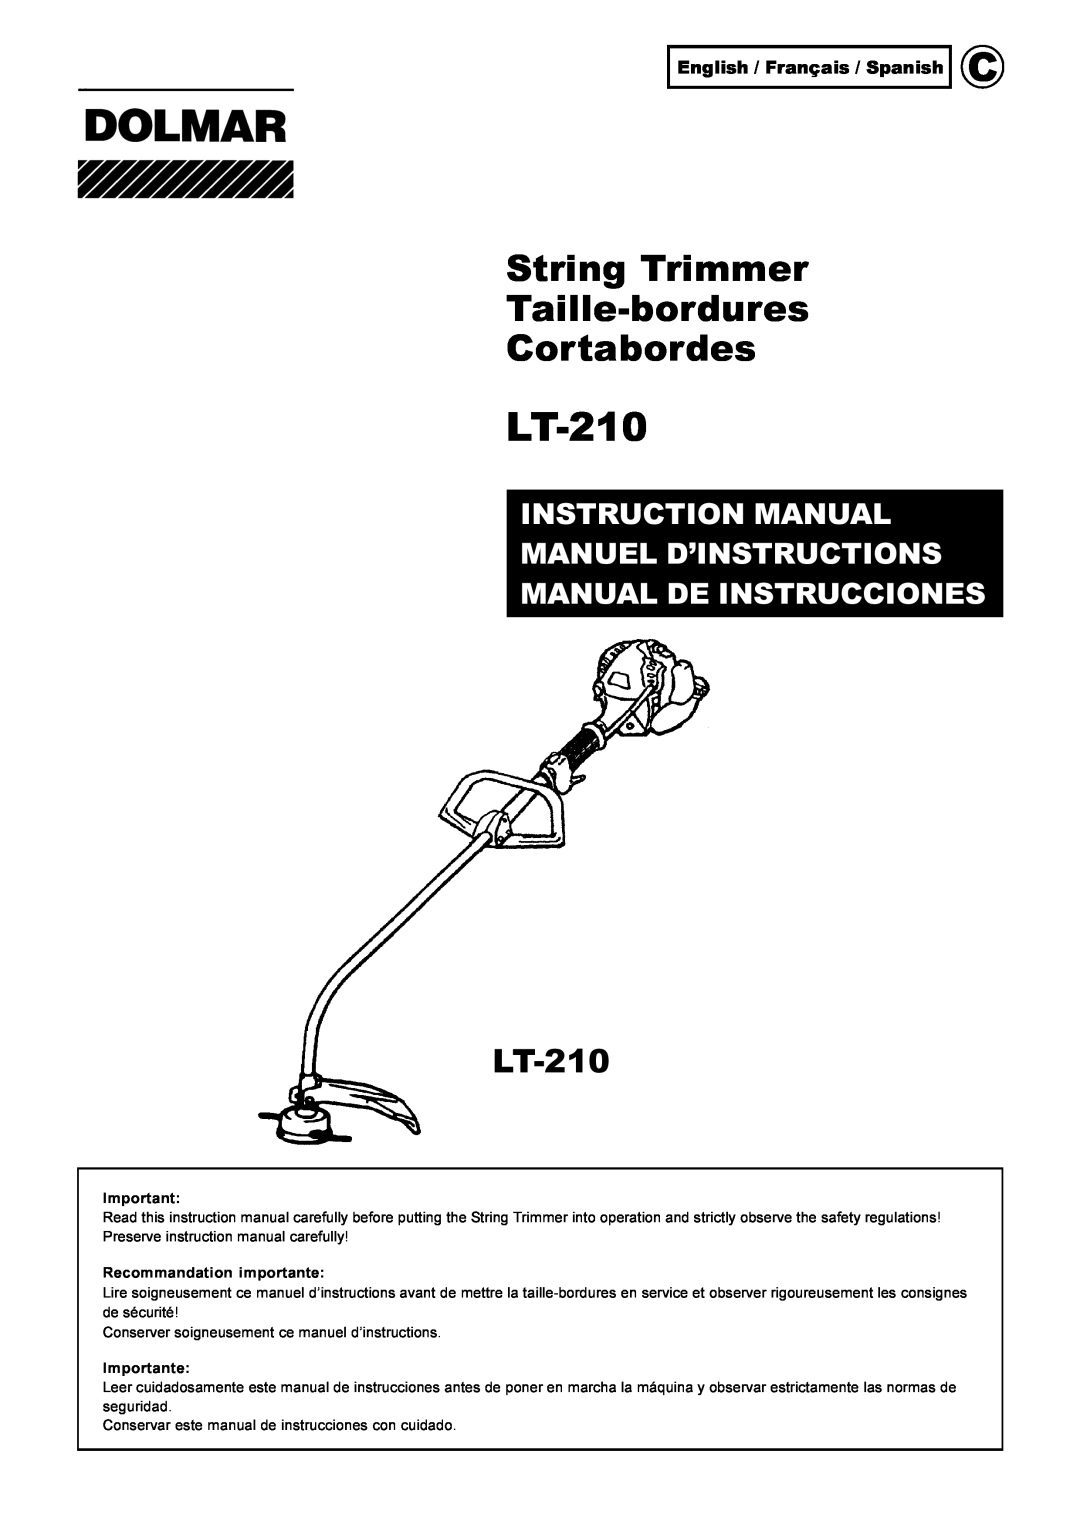 Makita LT-210 instruction manual English / Français / Spanish, String Trimmer Taille-bordures Cortabordes 